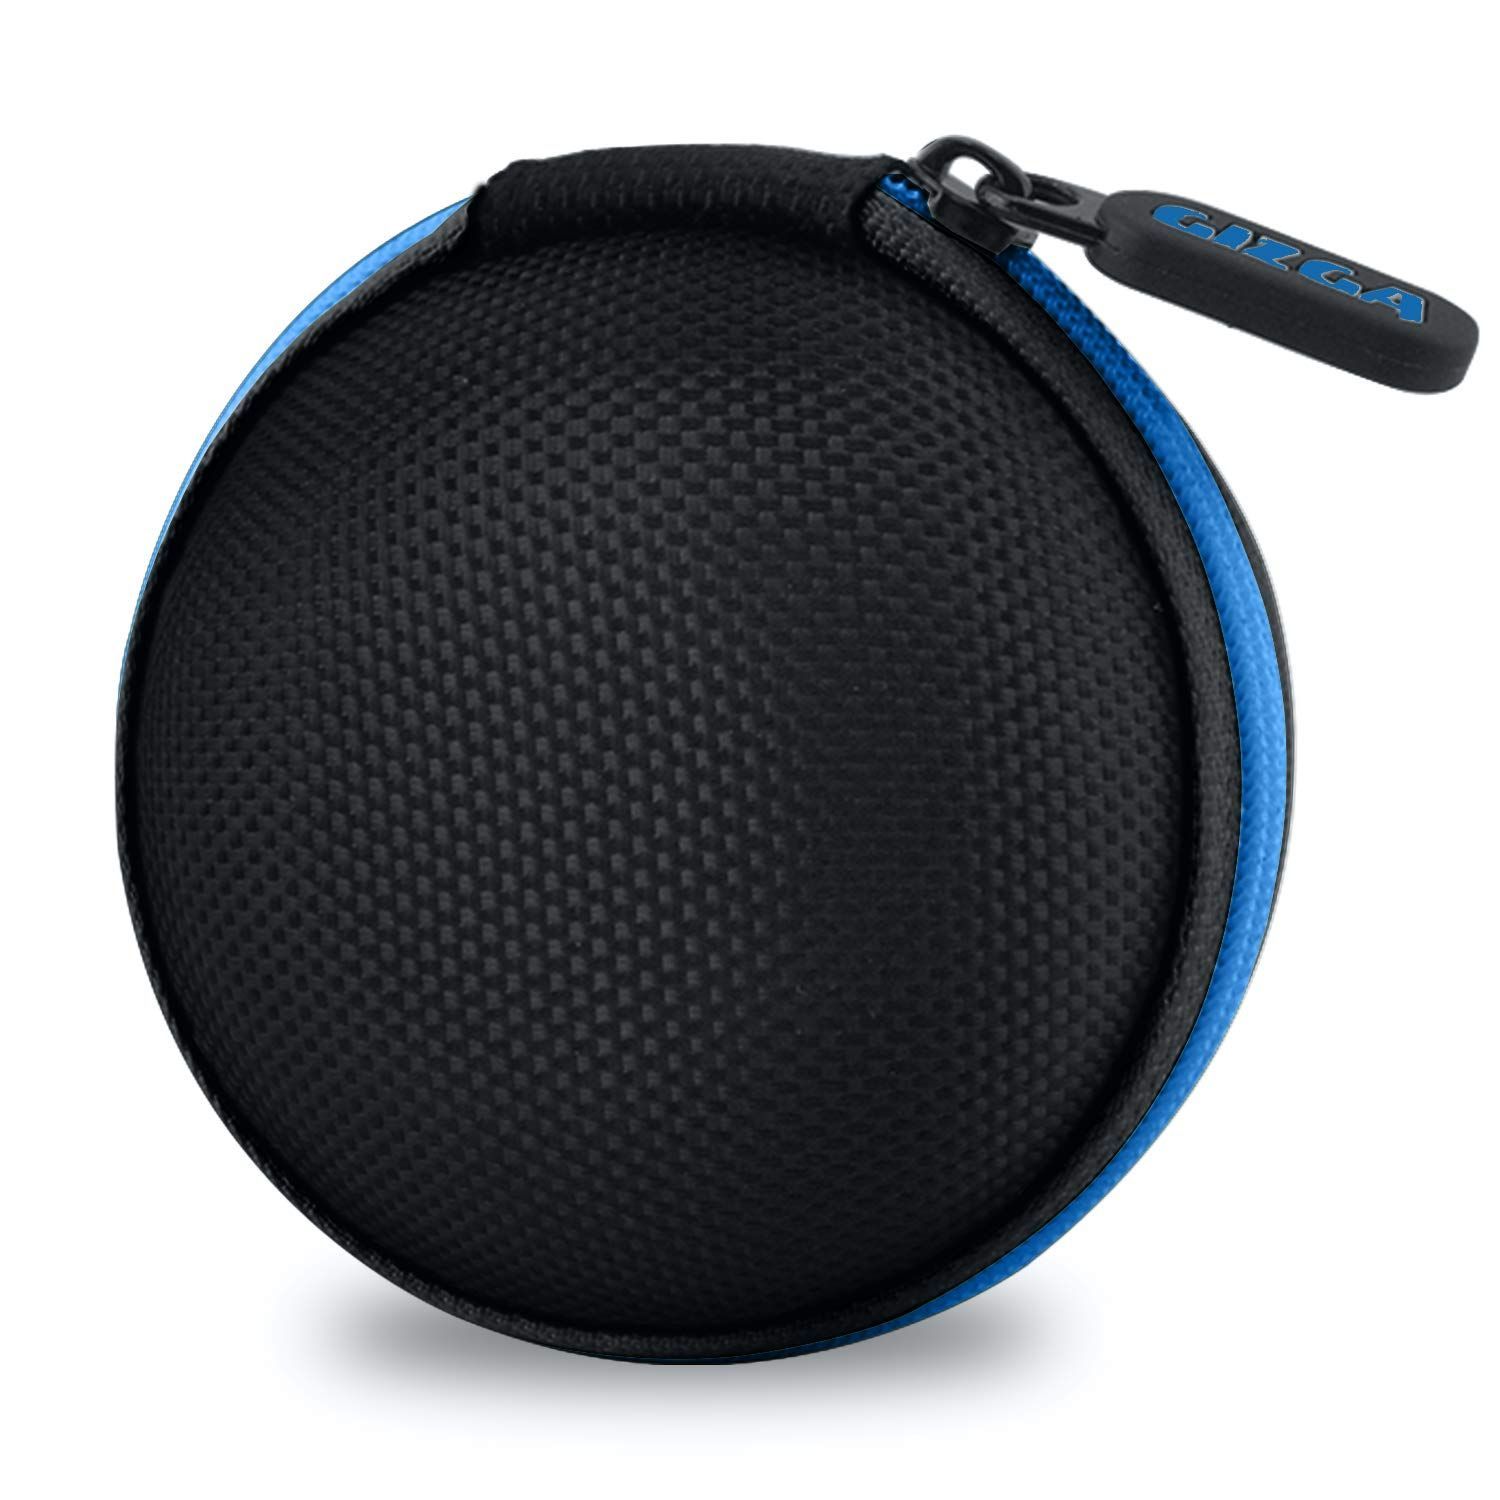 Gizga Essentials earphones, Multi-Purpose Pocket Storage Travel Organizer for Earphones, Headset, Pen Drives, SD Cards, Shock-Proof Ballistic Nylon, Soft Fabric, Mesh Pocket, Blue